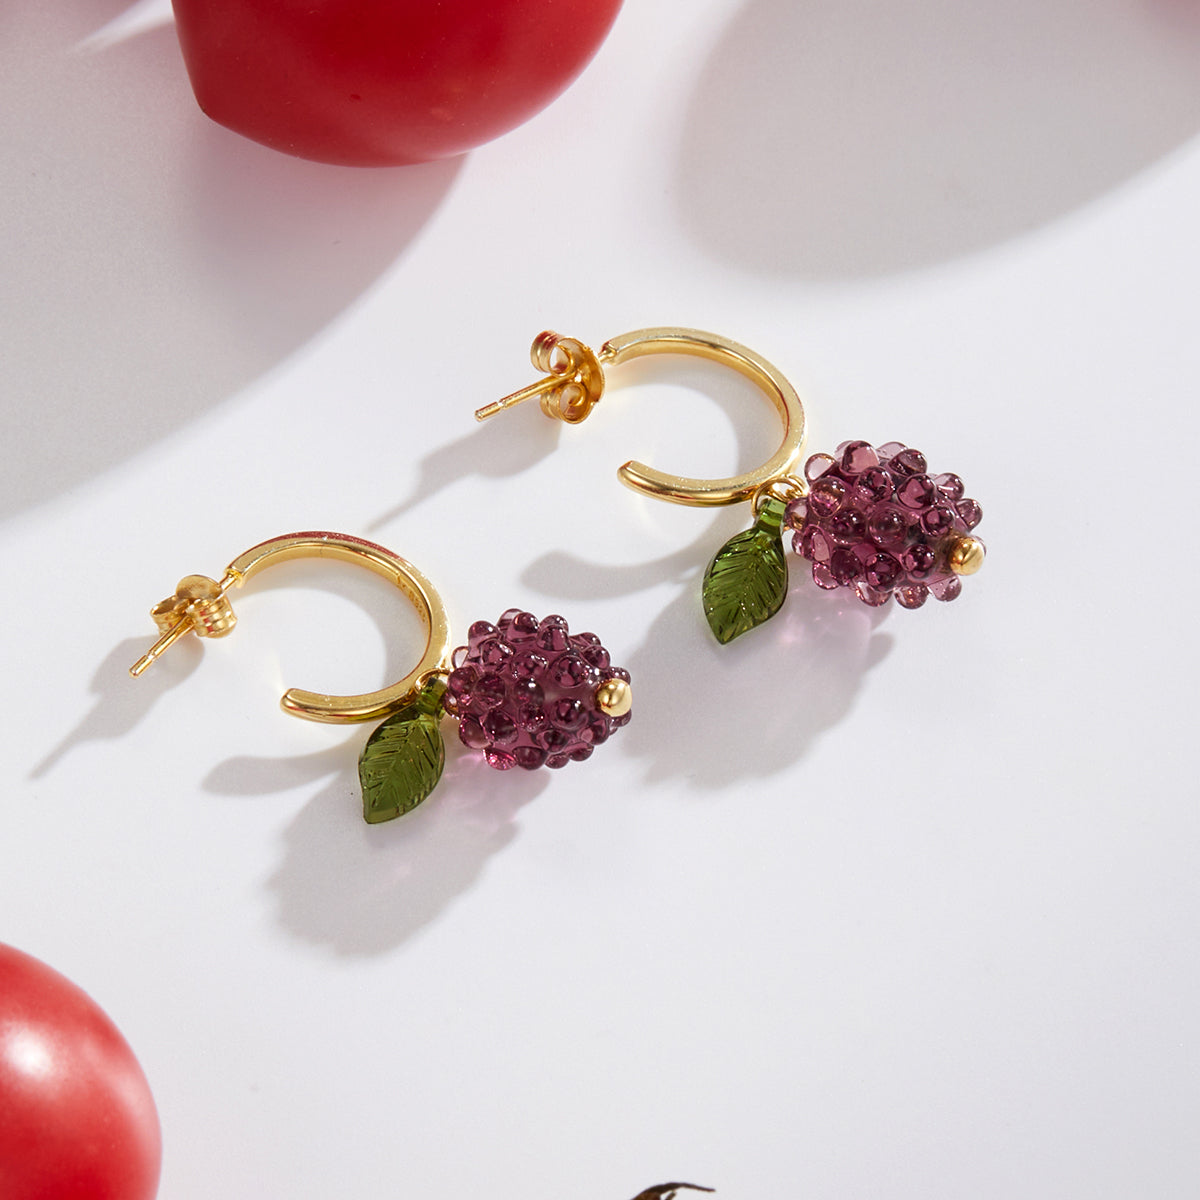 Grape Dangling Earrings Mini Fruit Earrings for Girls Sterling Silver